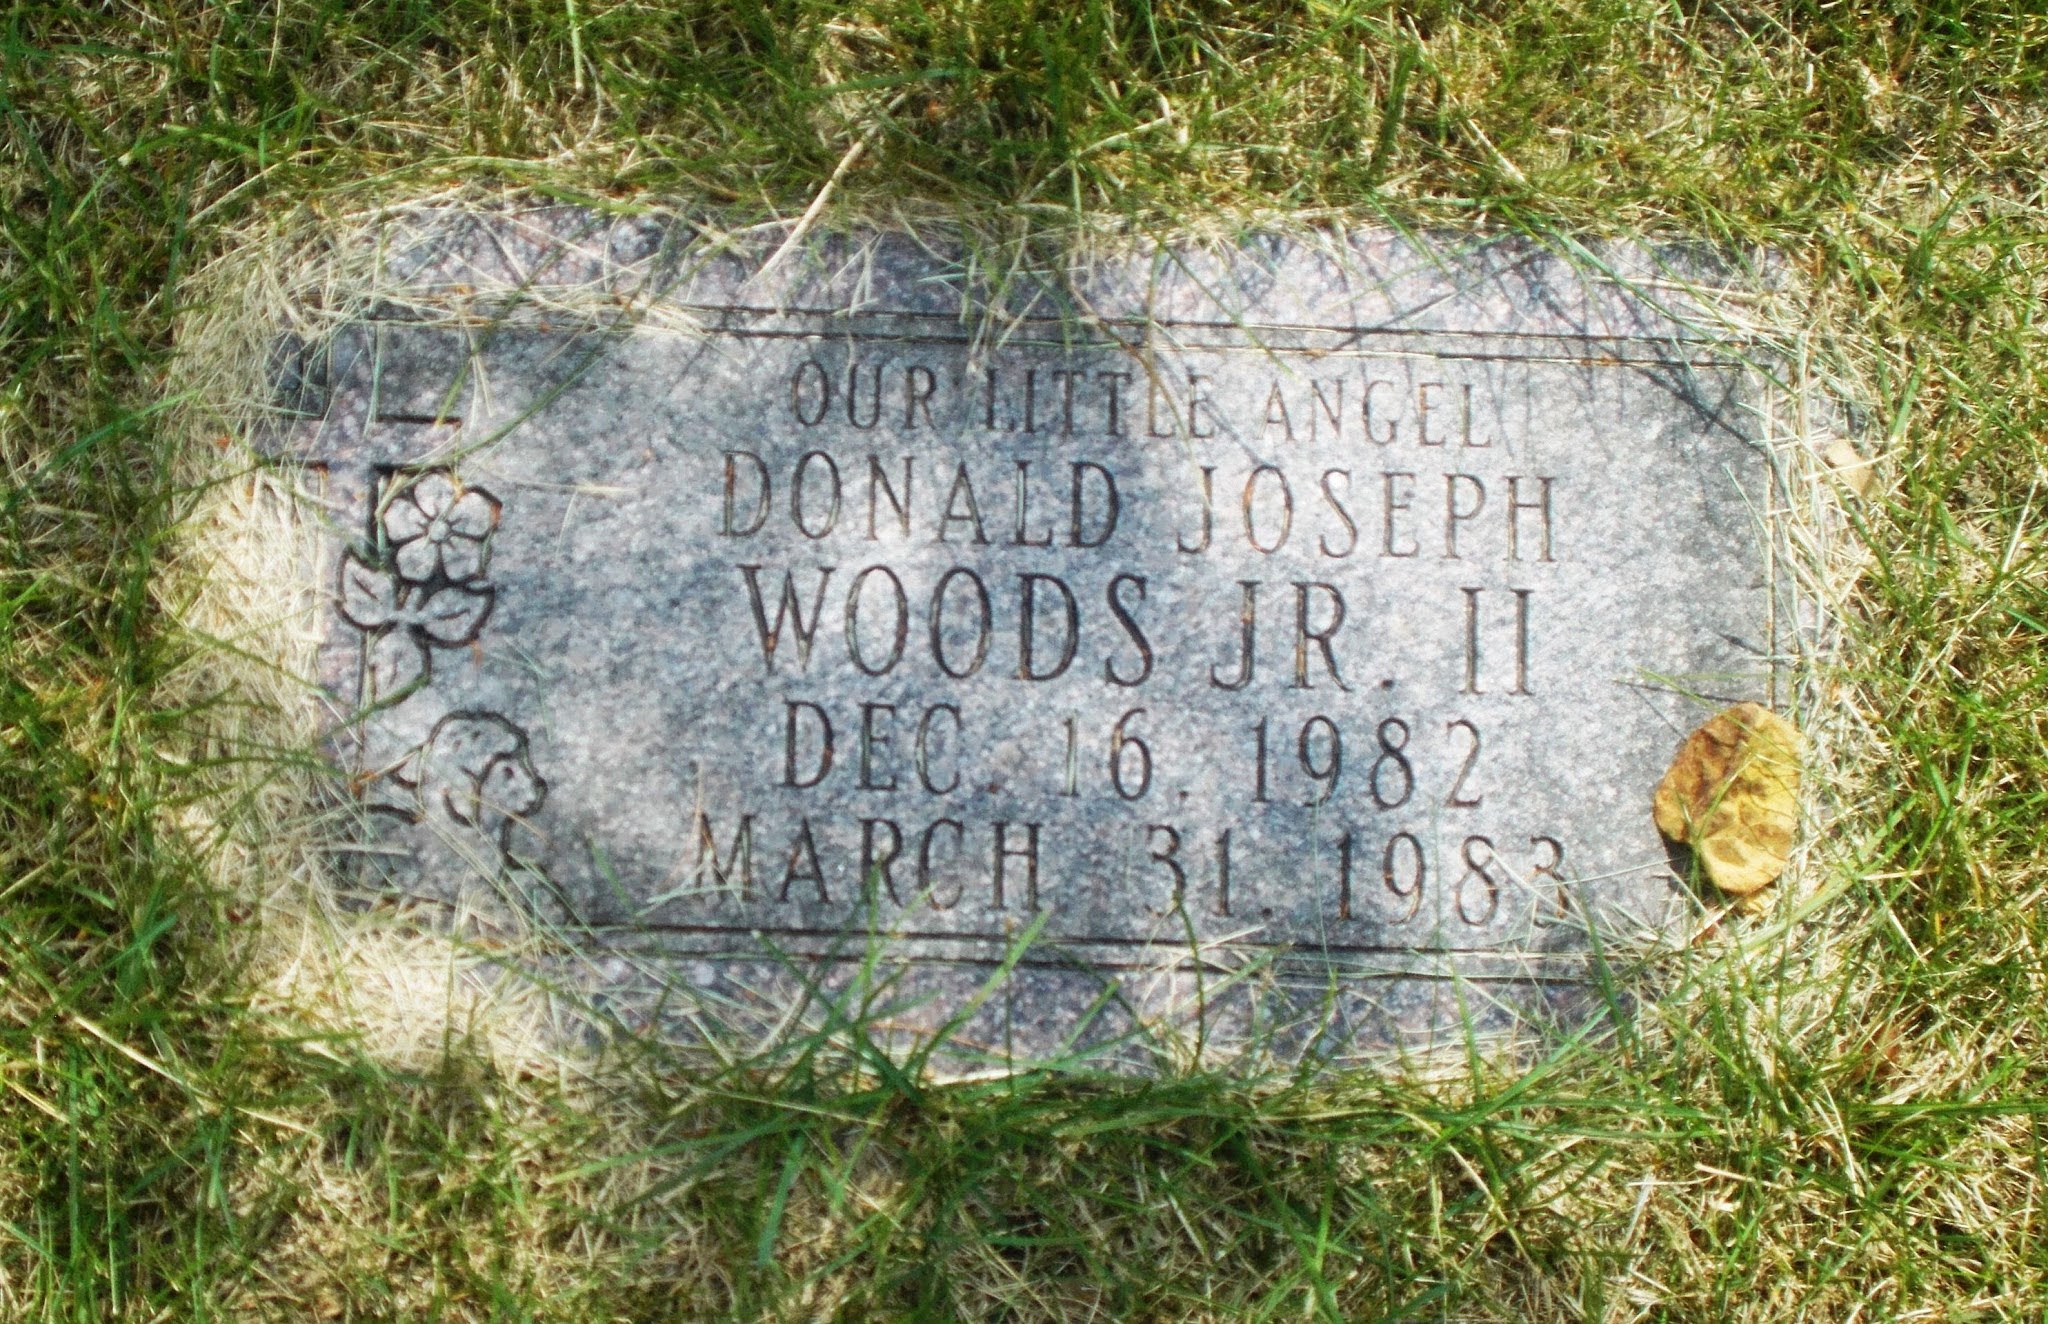 Donald Joseph Woods, Jr